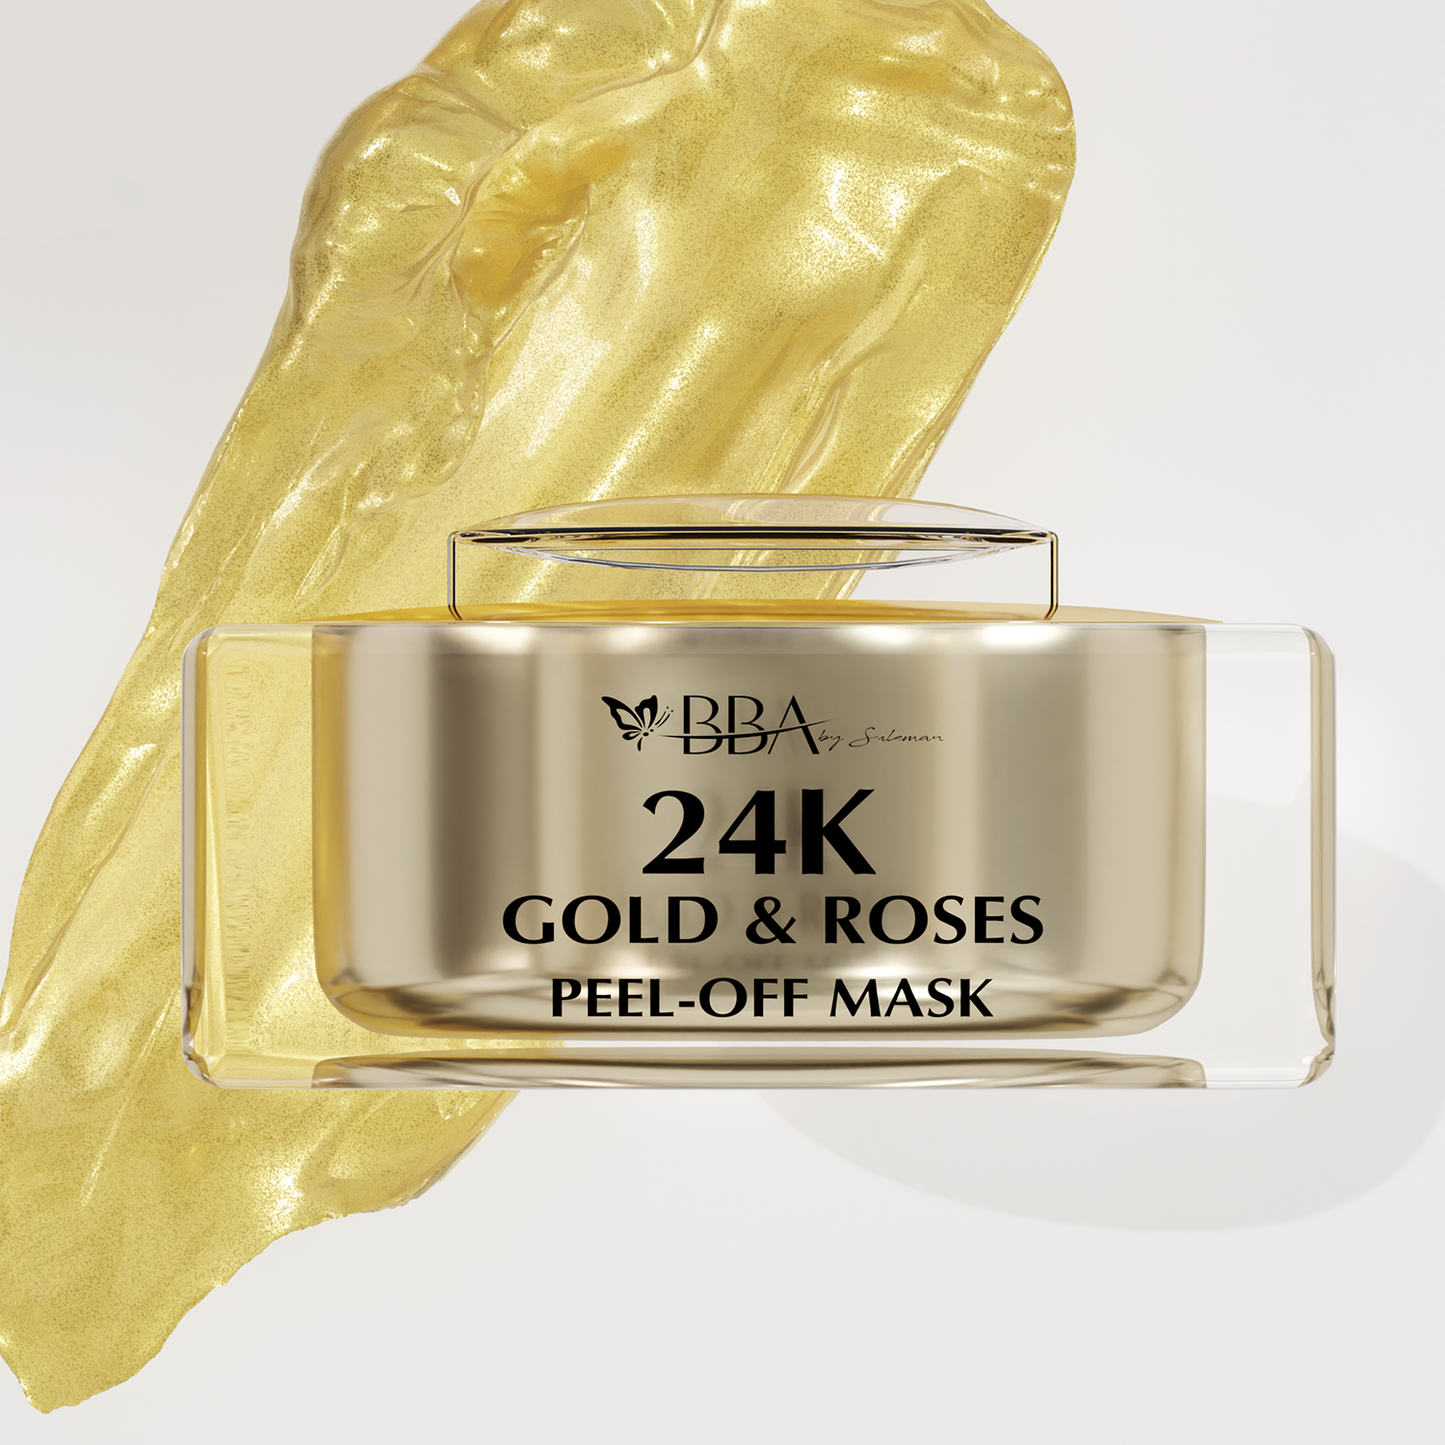 24K Gold & Roses Peel-Off Mask